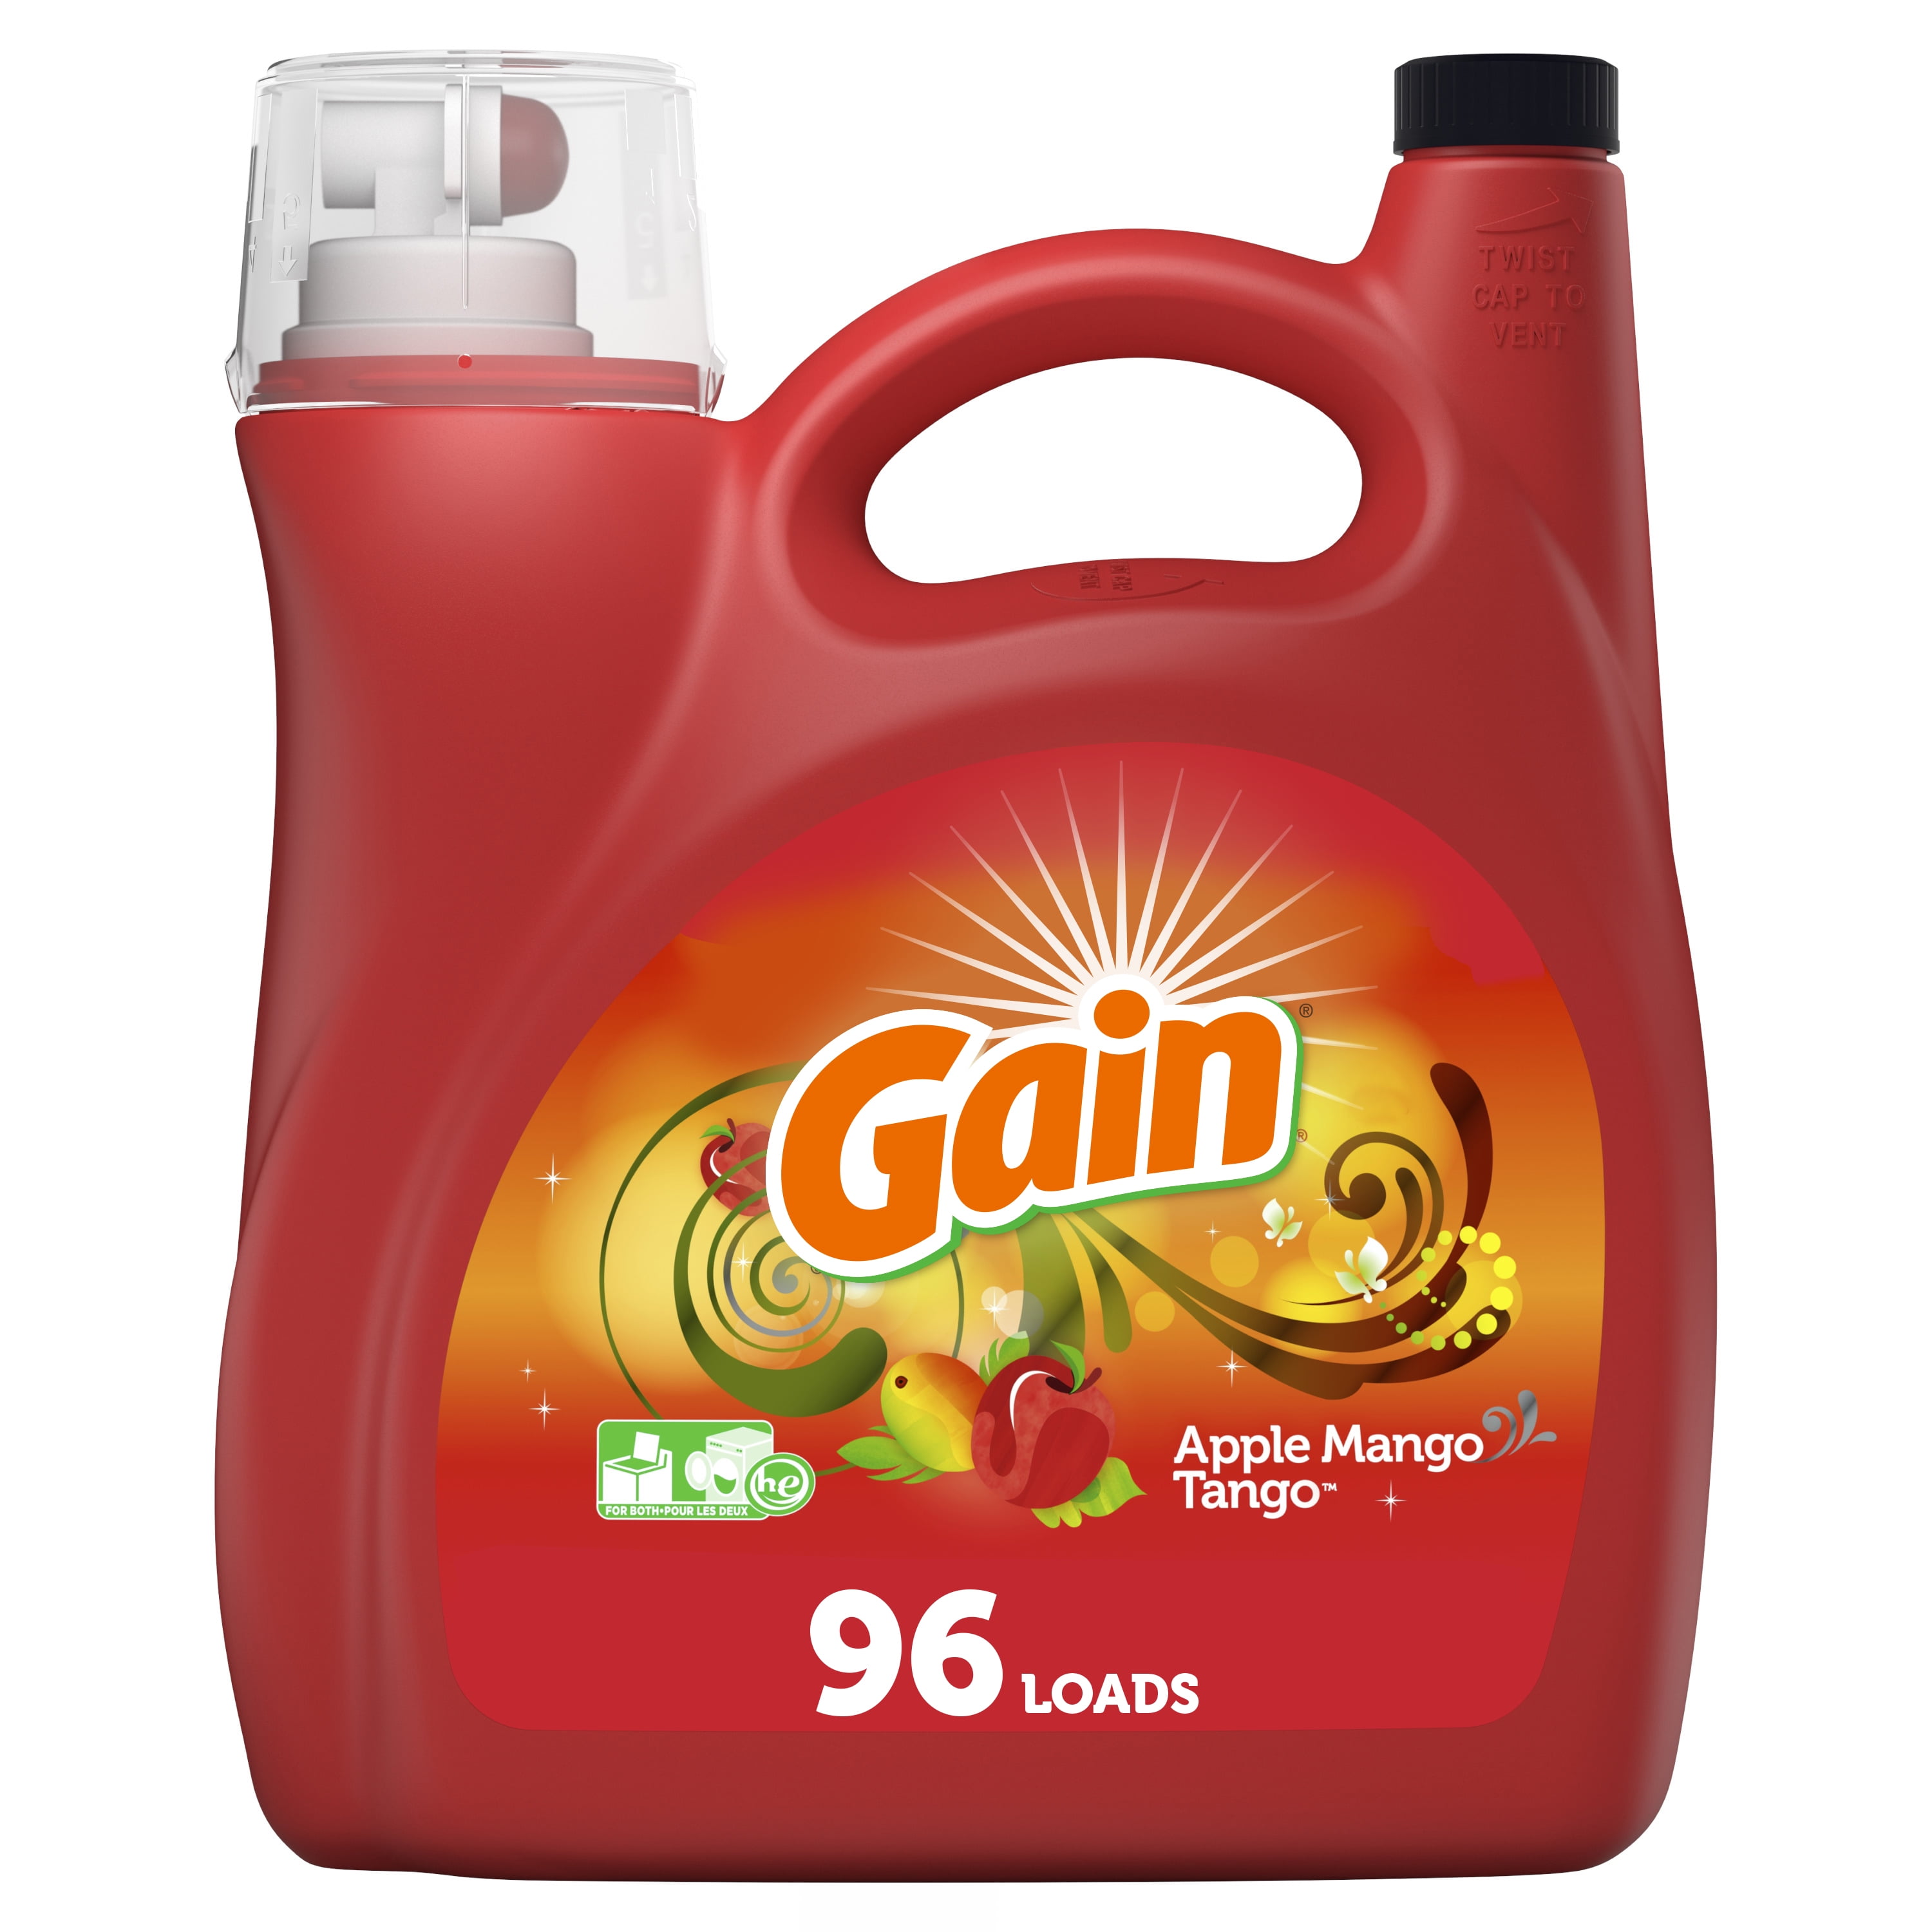 buy-gain-apple-mango-he-96-loads-liquid-laundry-detergent-150-fl-oz-online-at-lowest-price-in